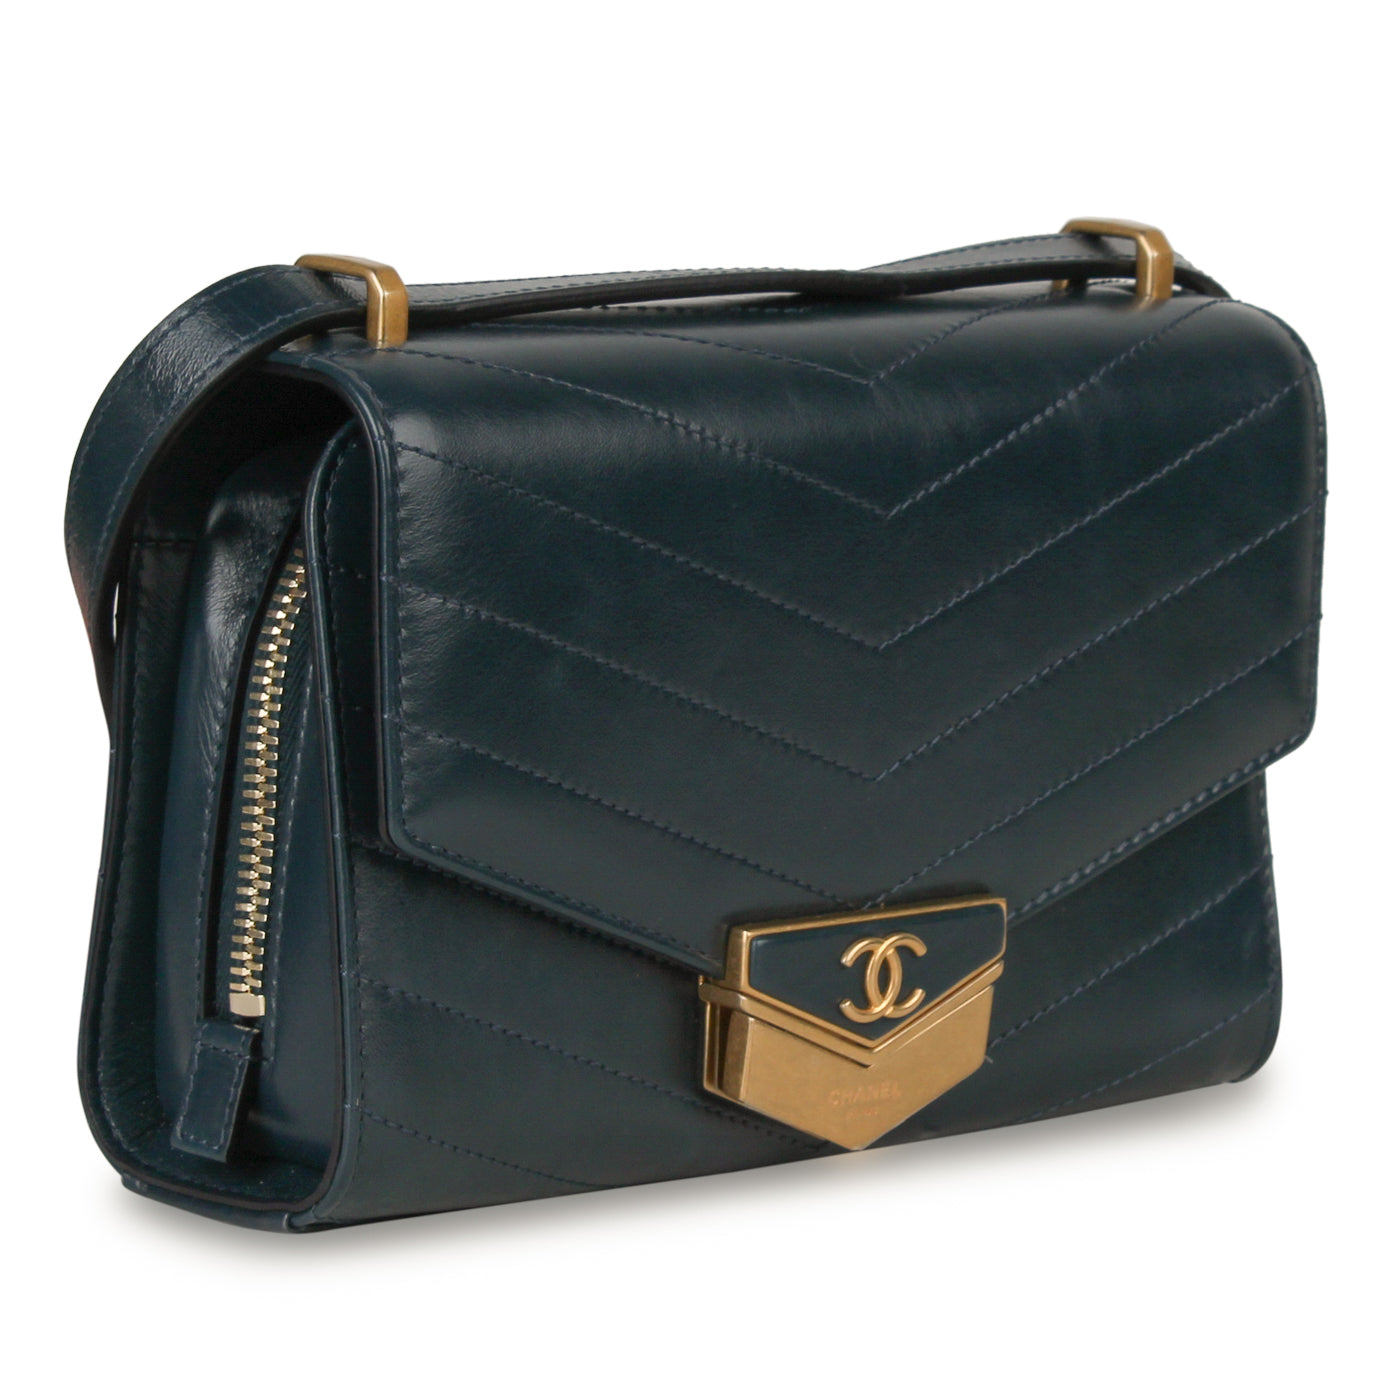 Chanel Calfskin Chevron Medal Flap Bag